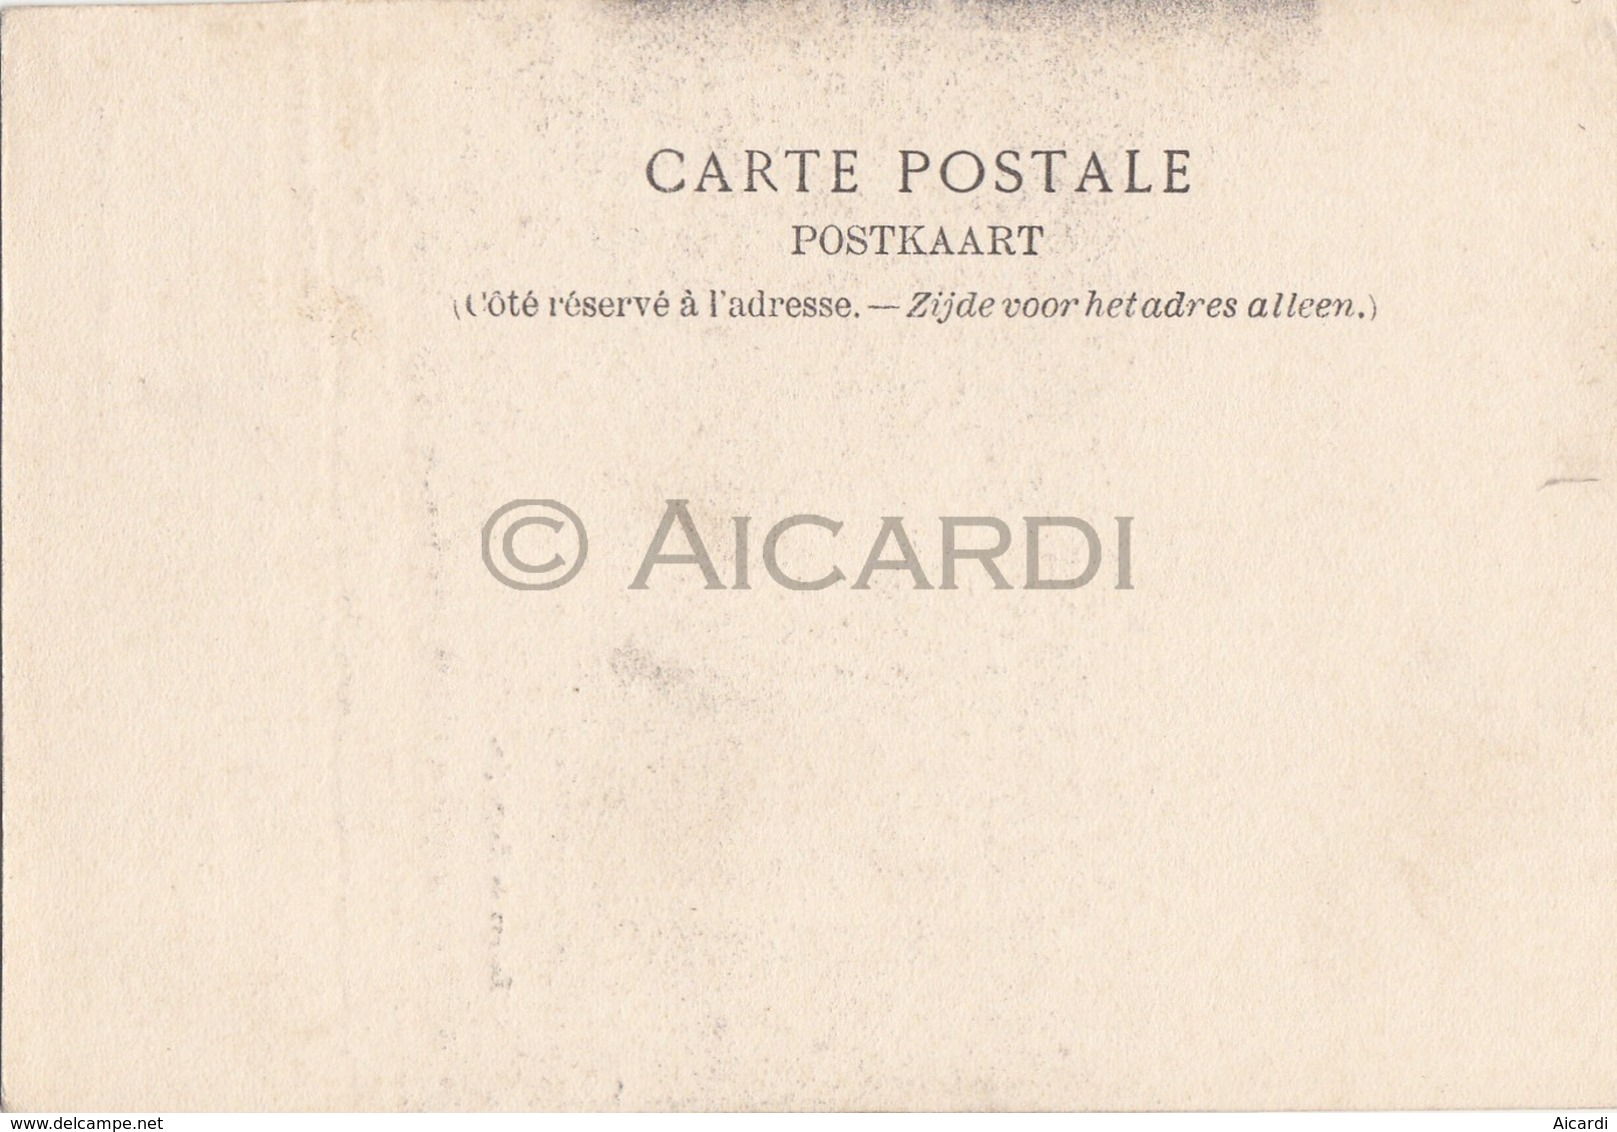 Postkaart/Carte Postale FALAËN Ruines De Montaigle (A56) - Onhaye